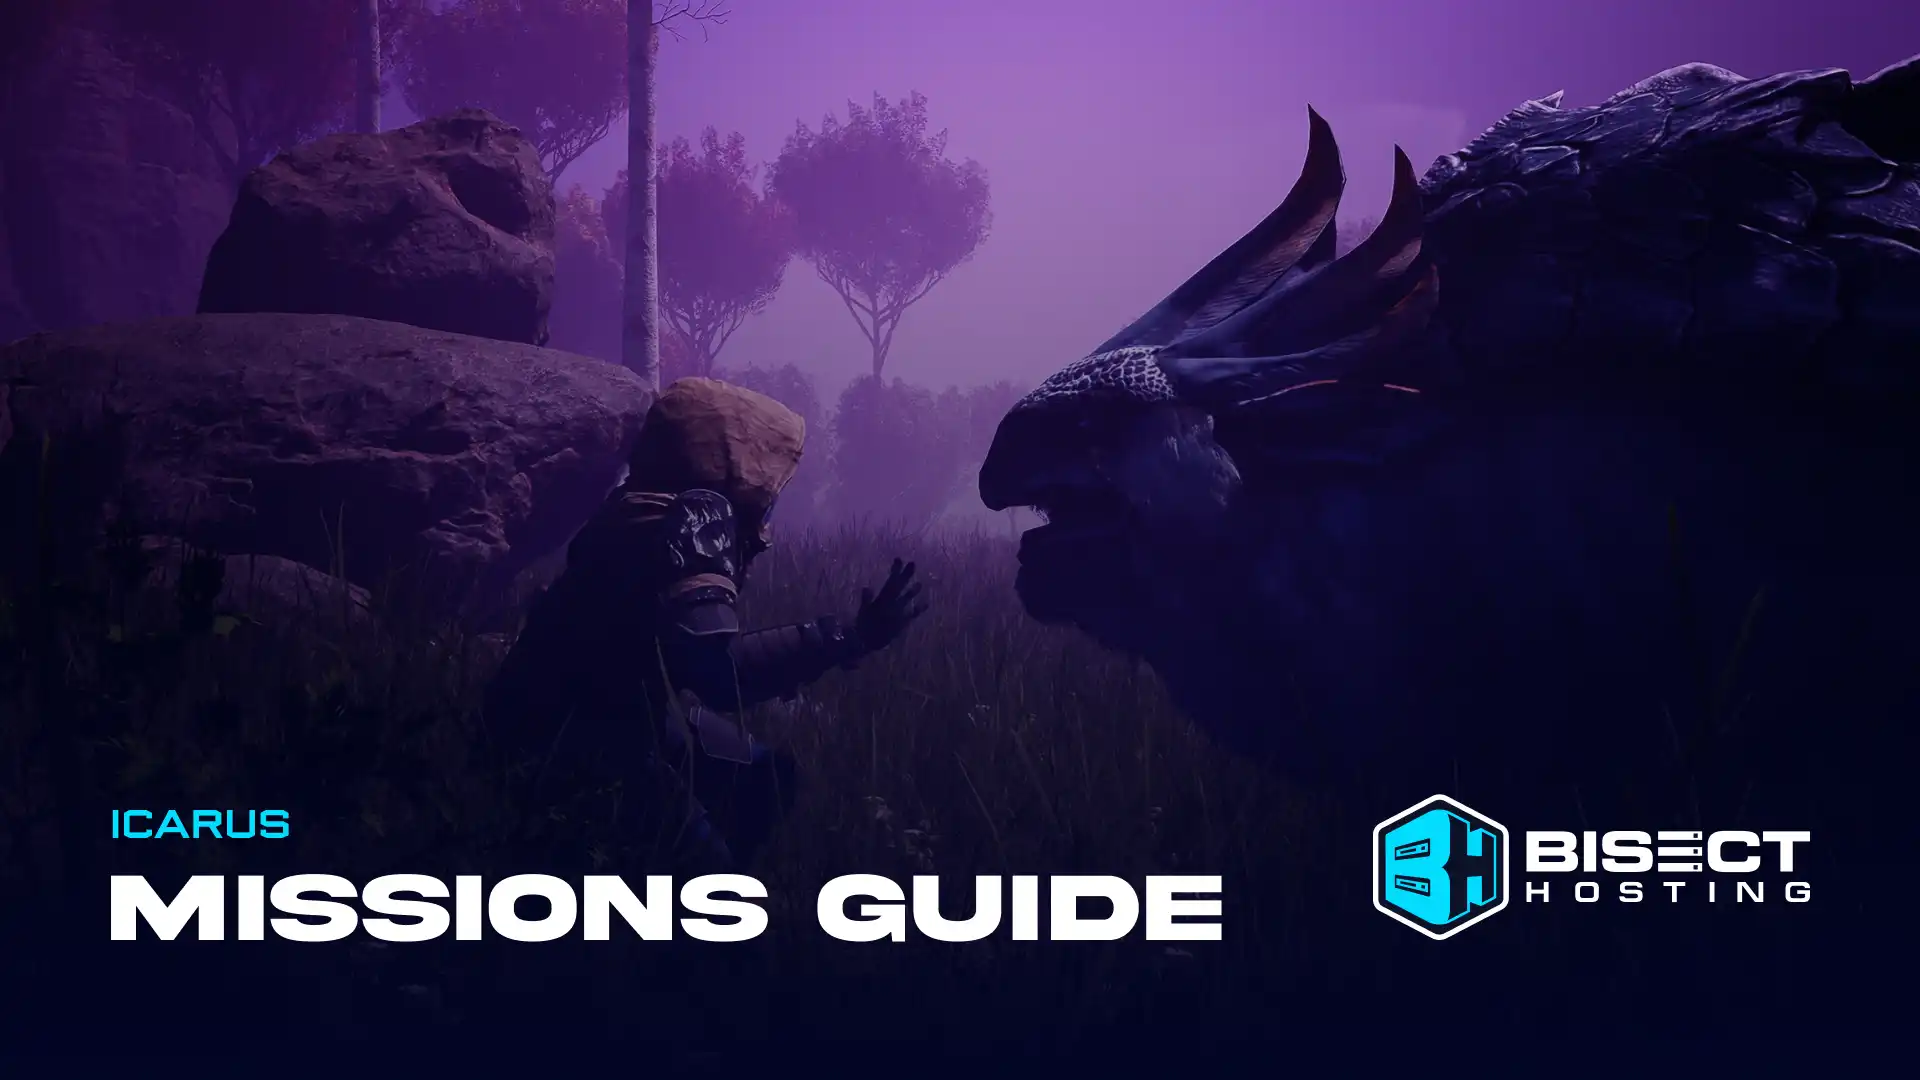 Icarus Missions Guide: Mission Types, Prospect Details, Rewards, & More